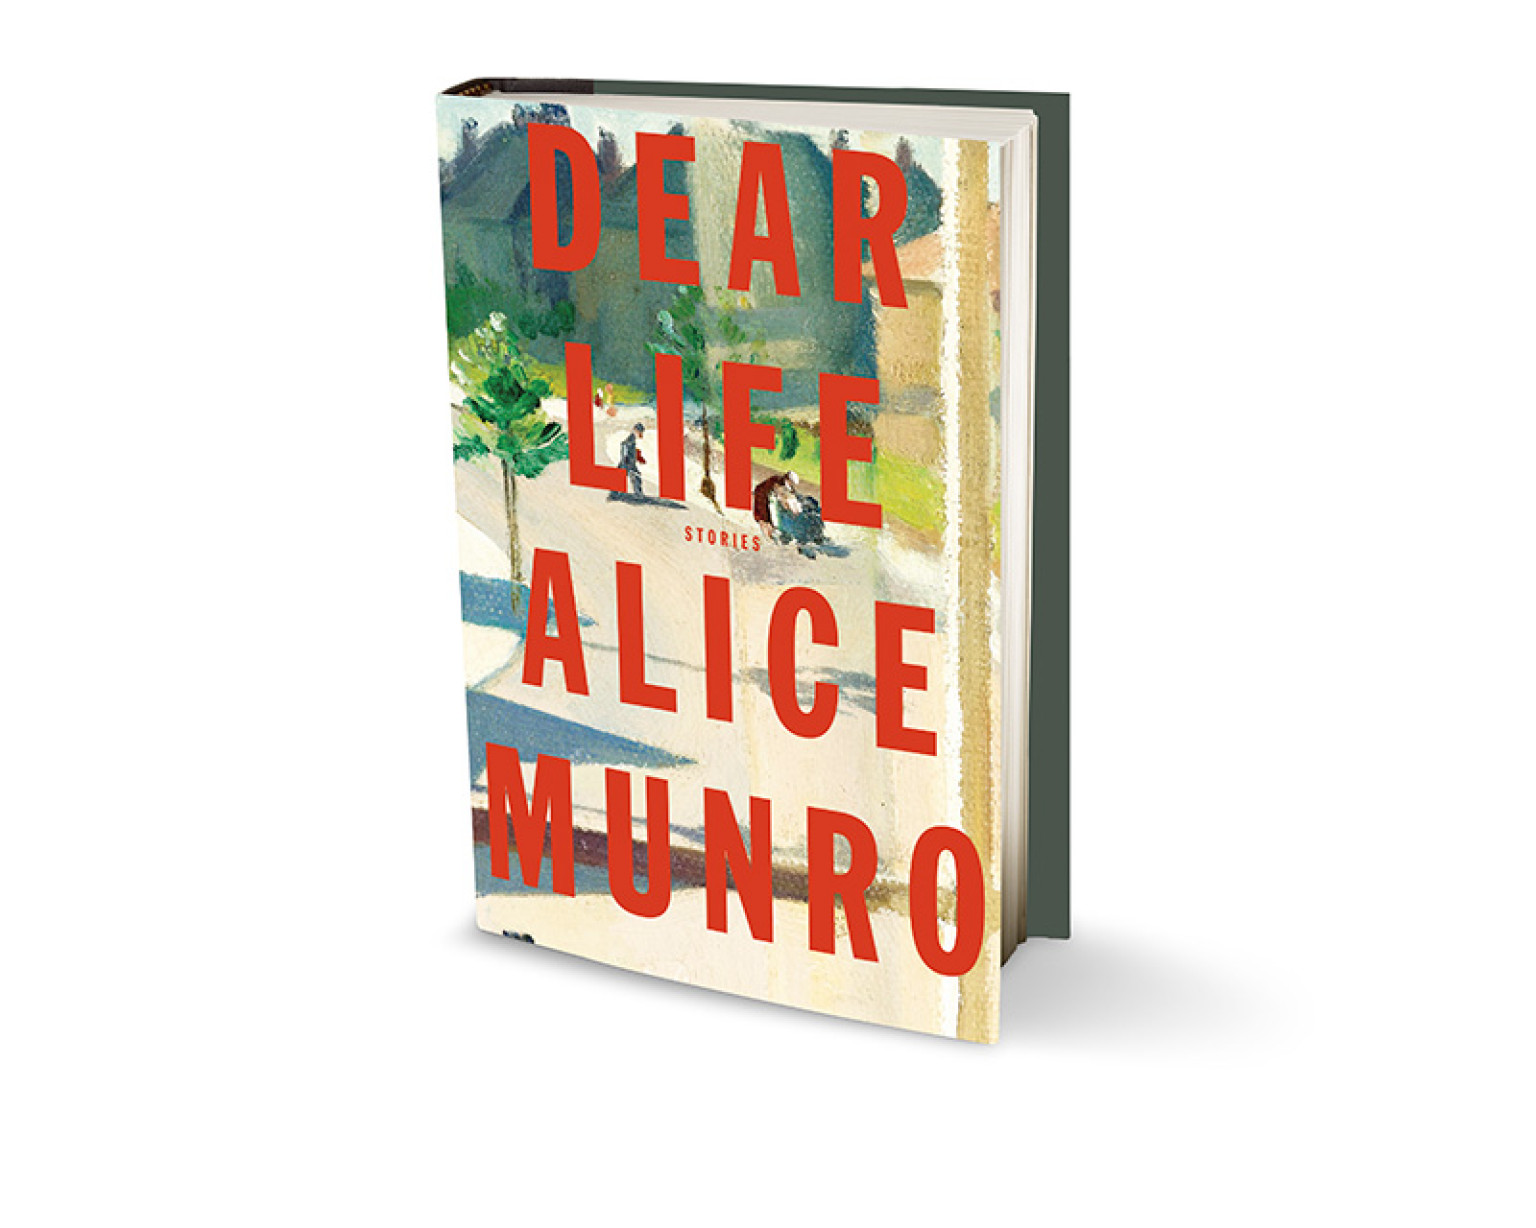 Долгое время книга. 40 Книг. Элис Манро лес. Элис Манро презентация. Alice Munro famous books.